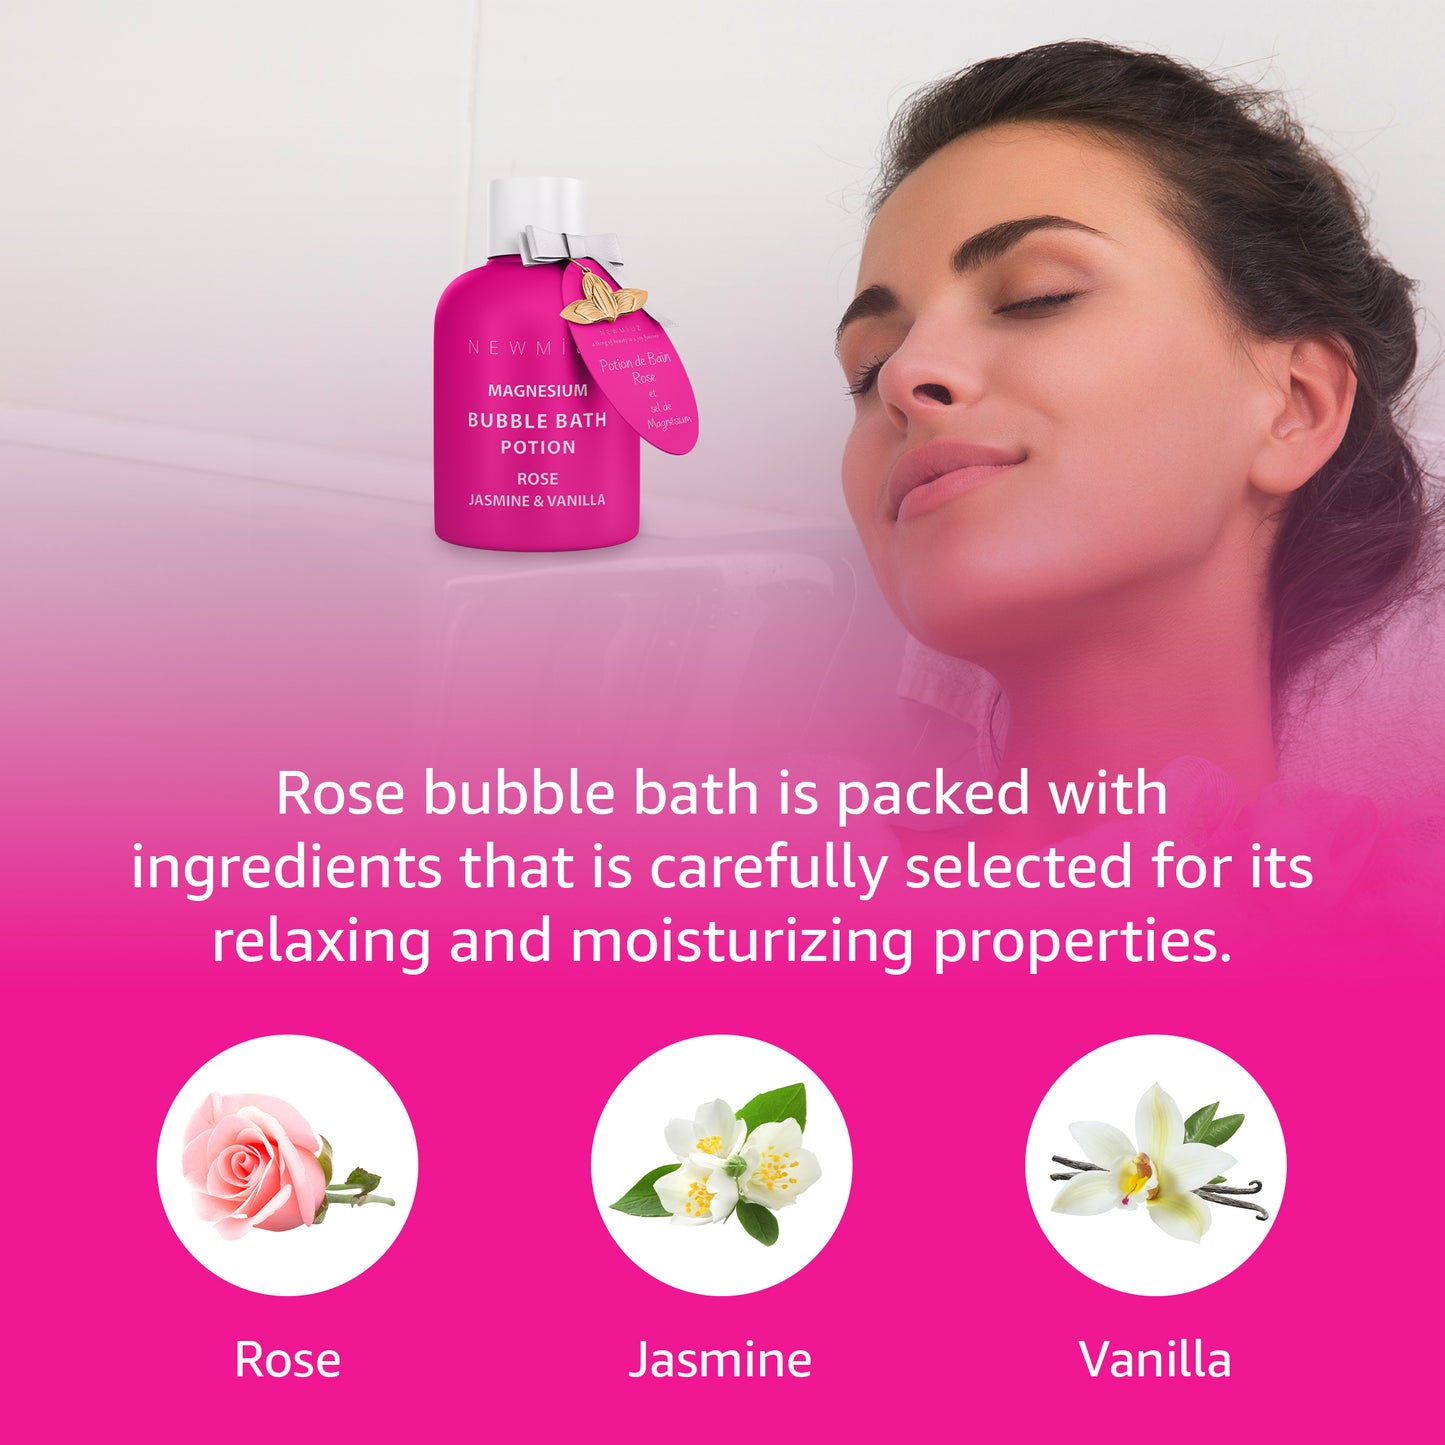 Rose Magnesium Bubble Bath Relax & Destress